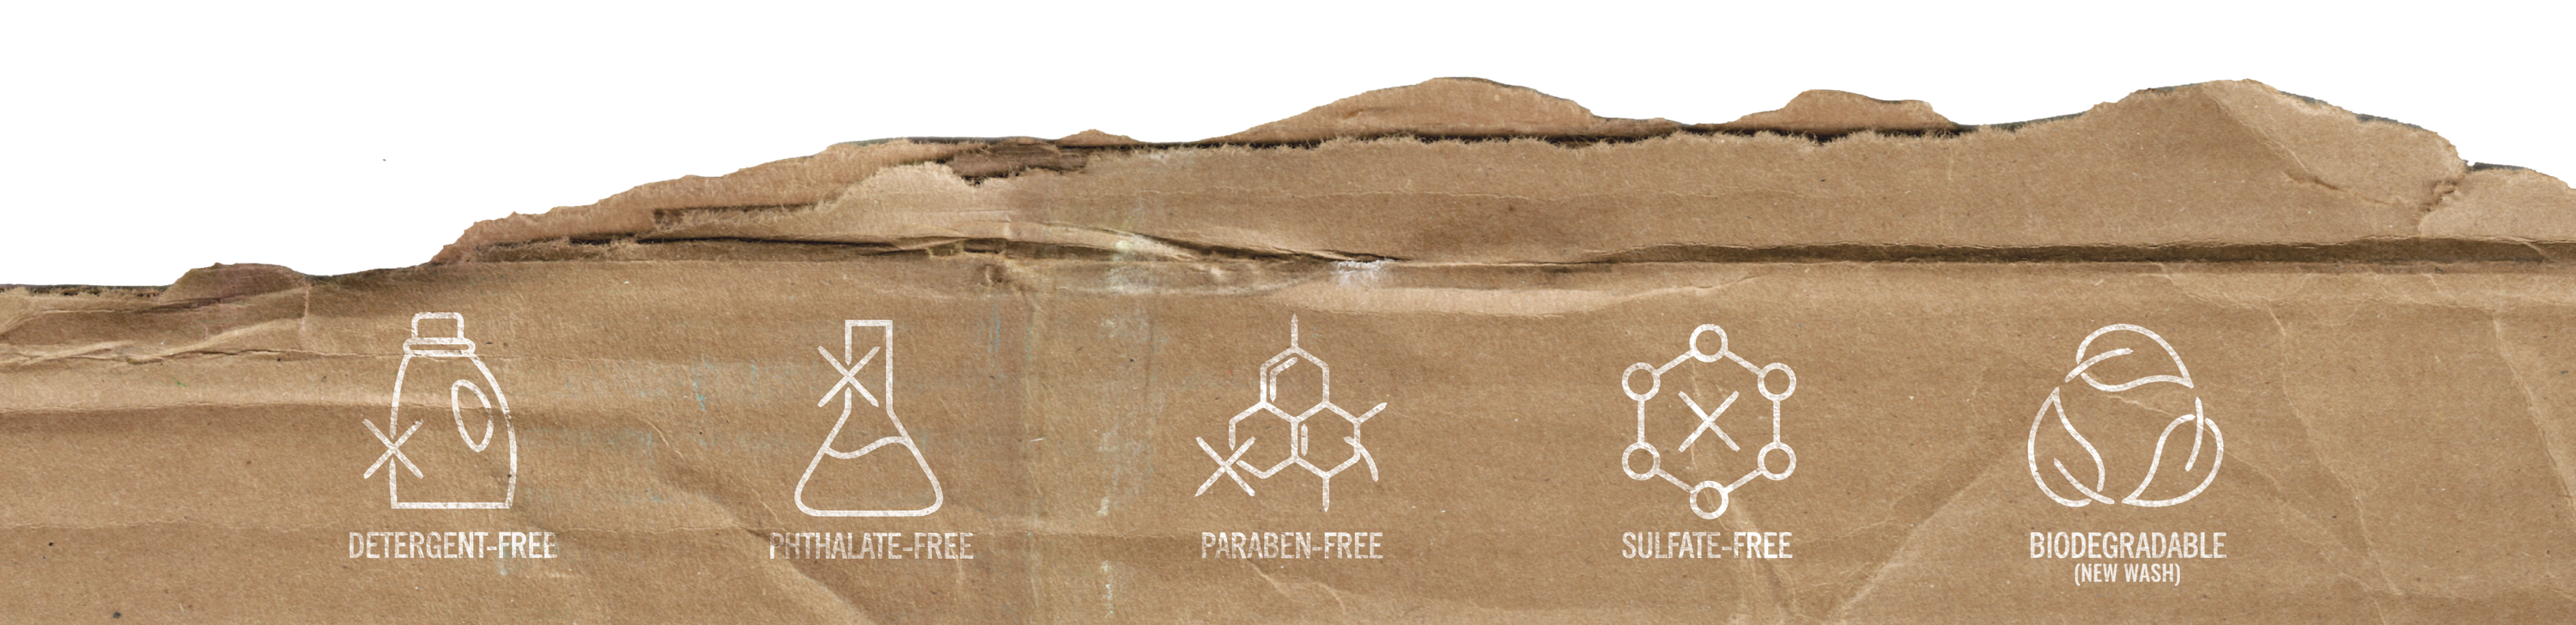 detergent-free, sulfate-free, paraben-free, phthalate-free, bio-degradable (NewWash)